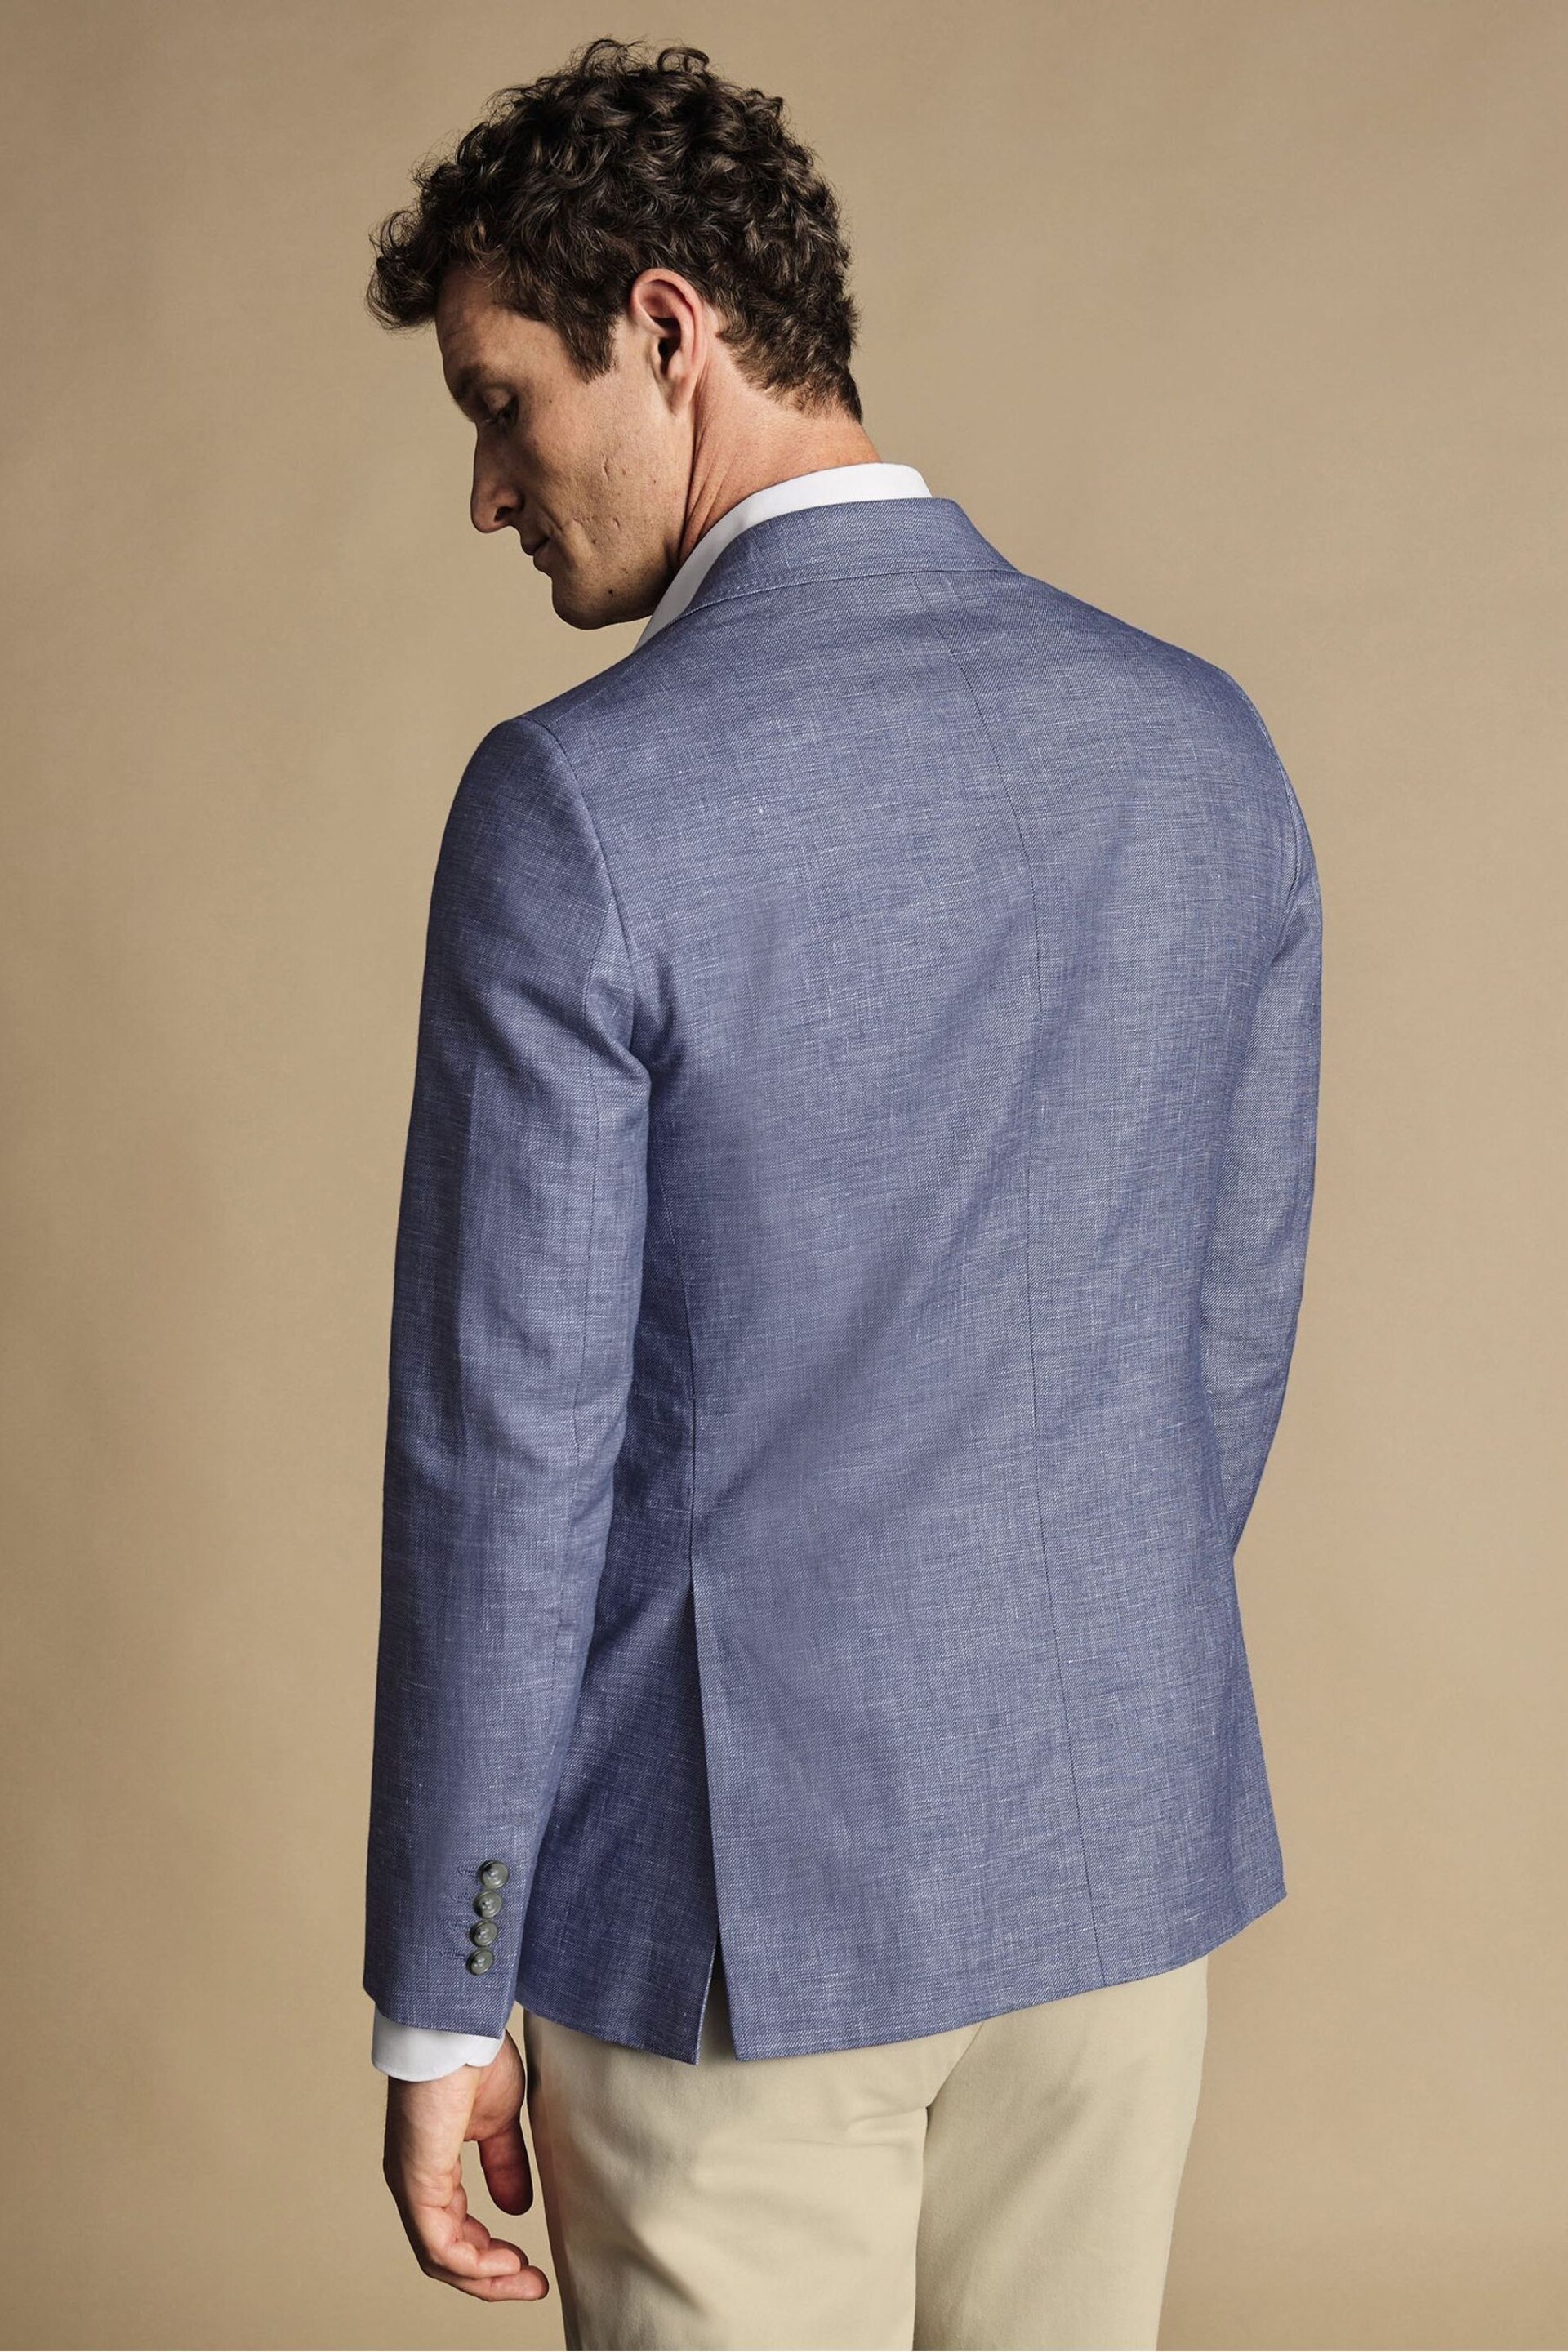 Charles Tyrwhitt Blue Linen Cotton Slim Fit Jacket - Image 2 of 5